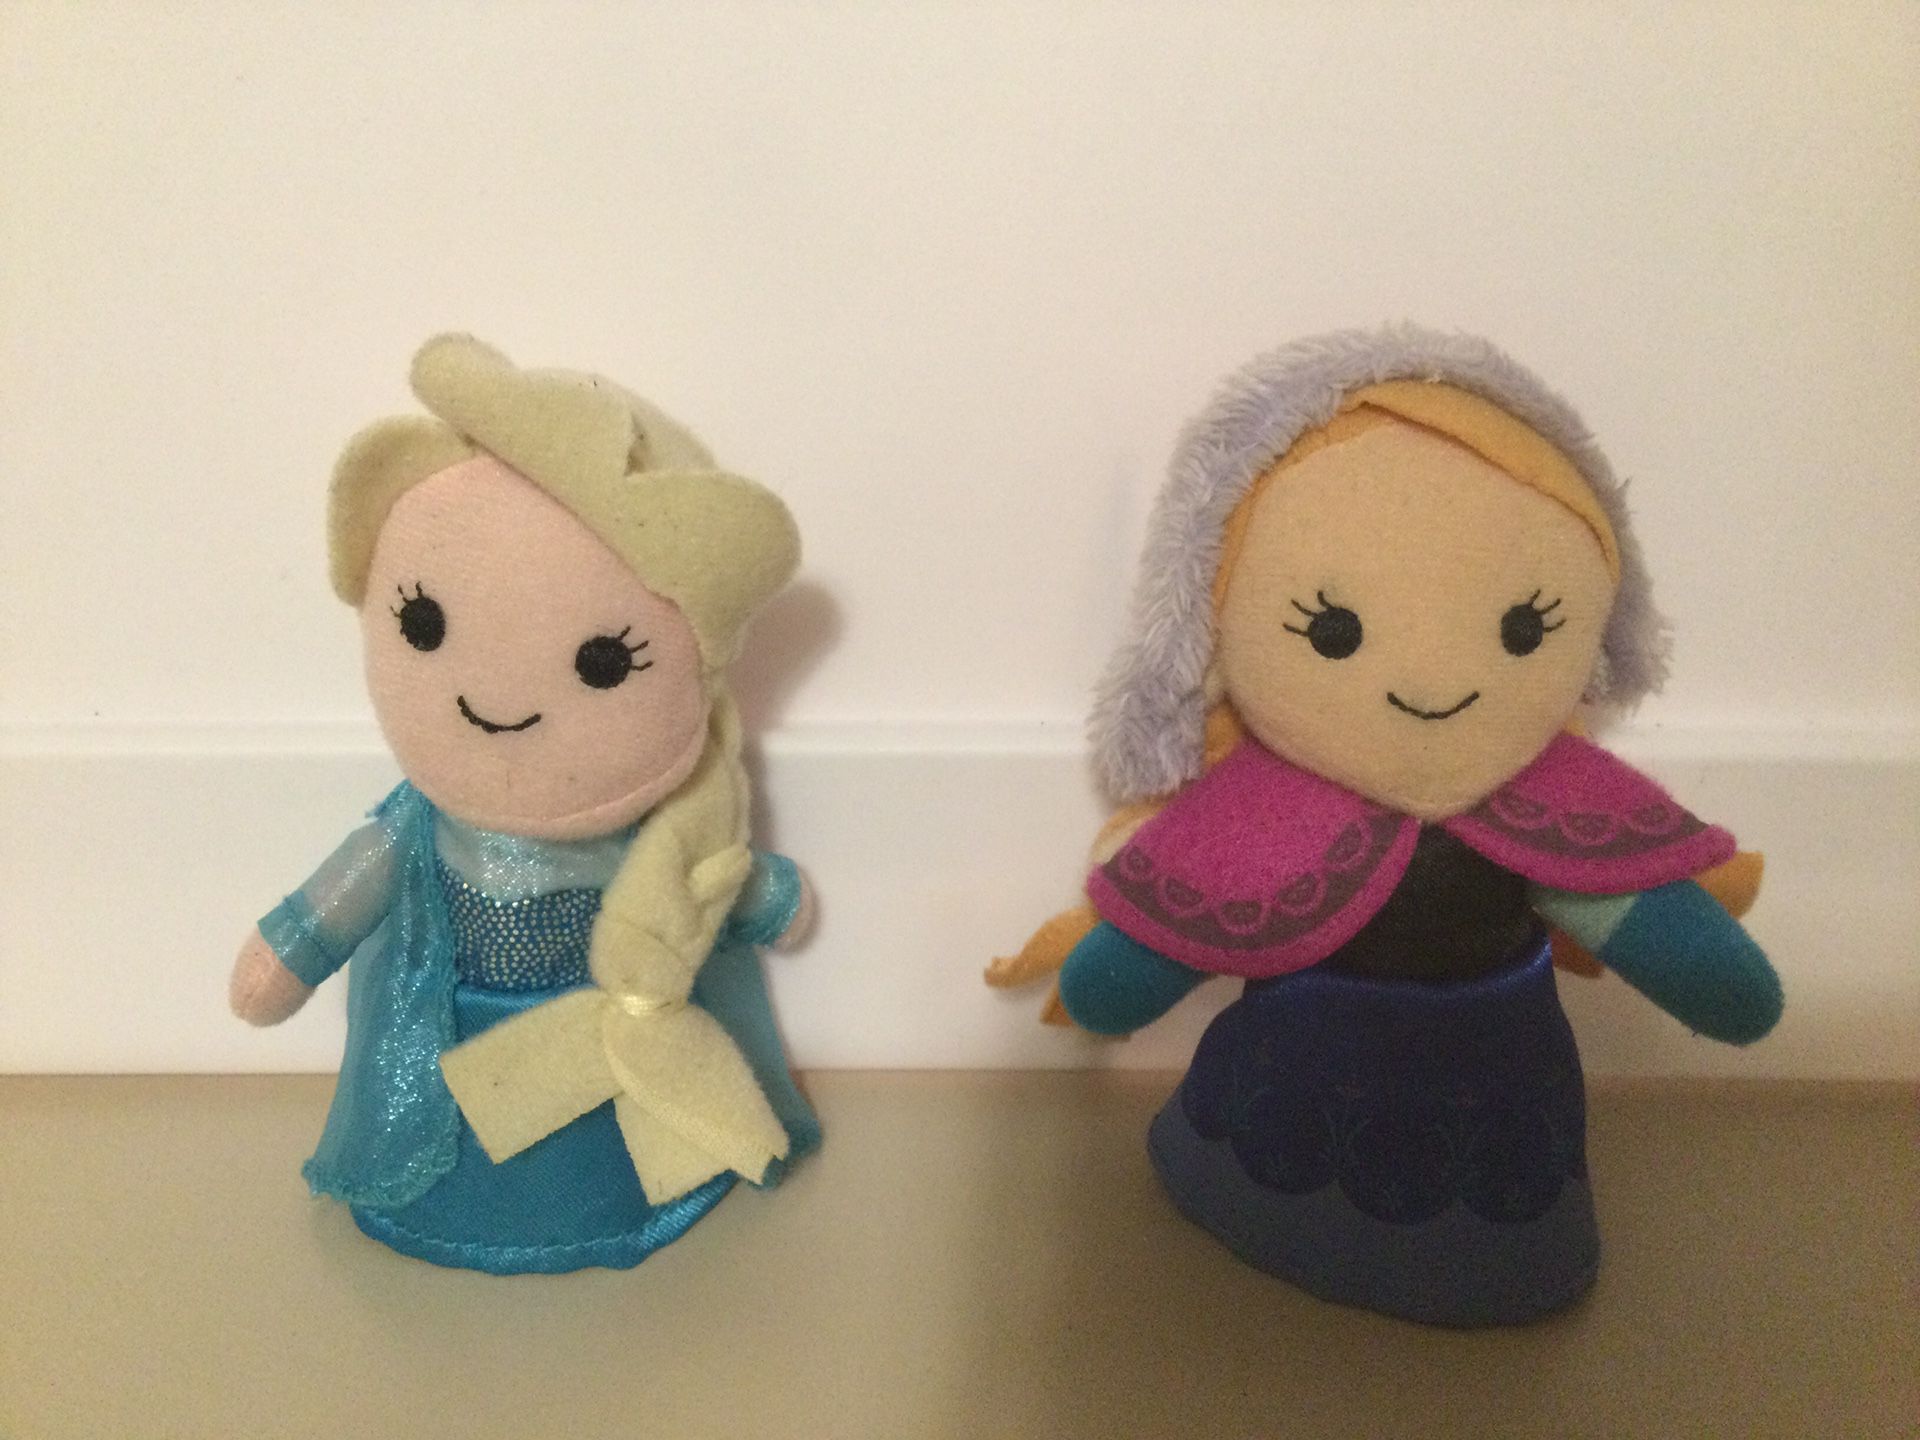 Elsa and Anna  fabric dolls 4” so cute!